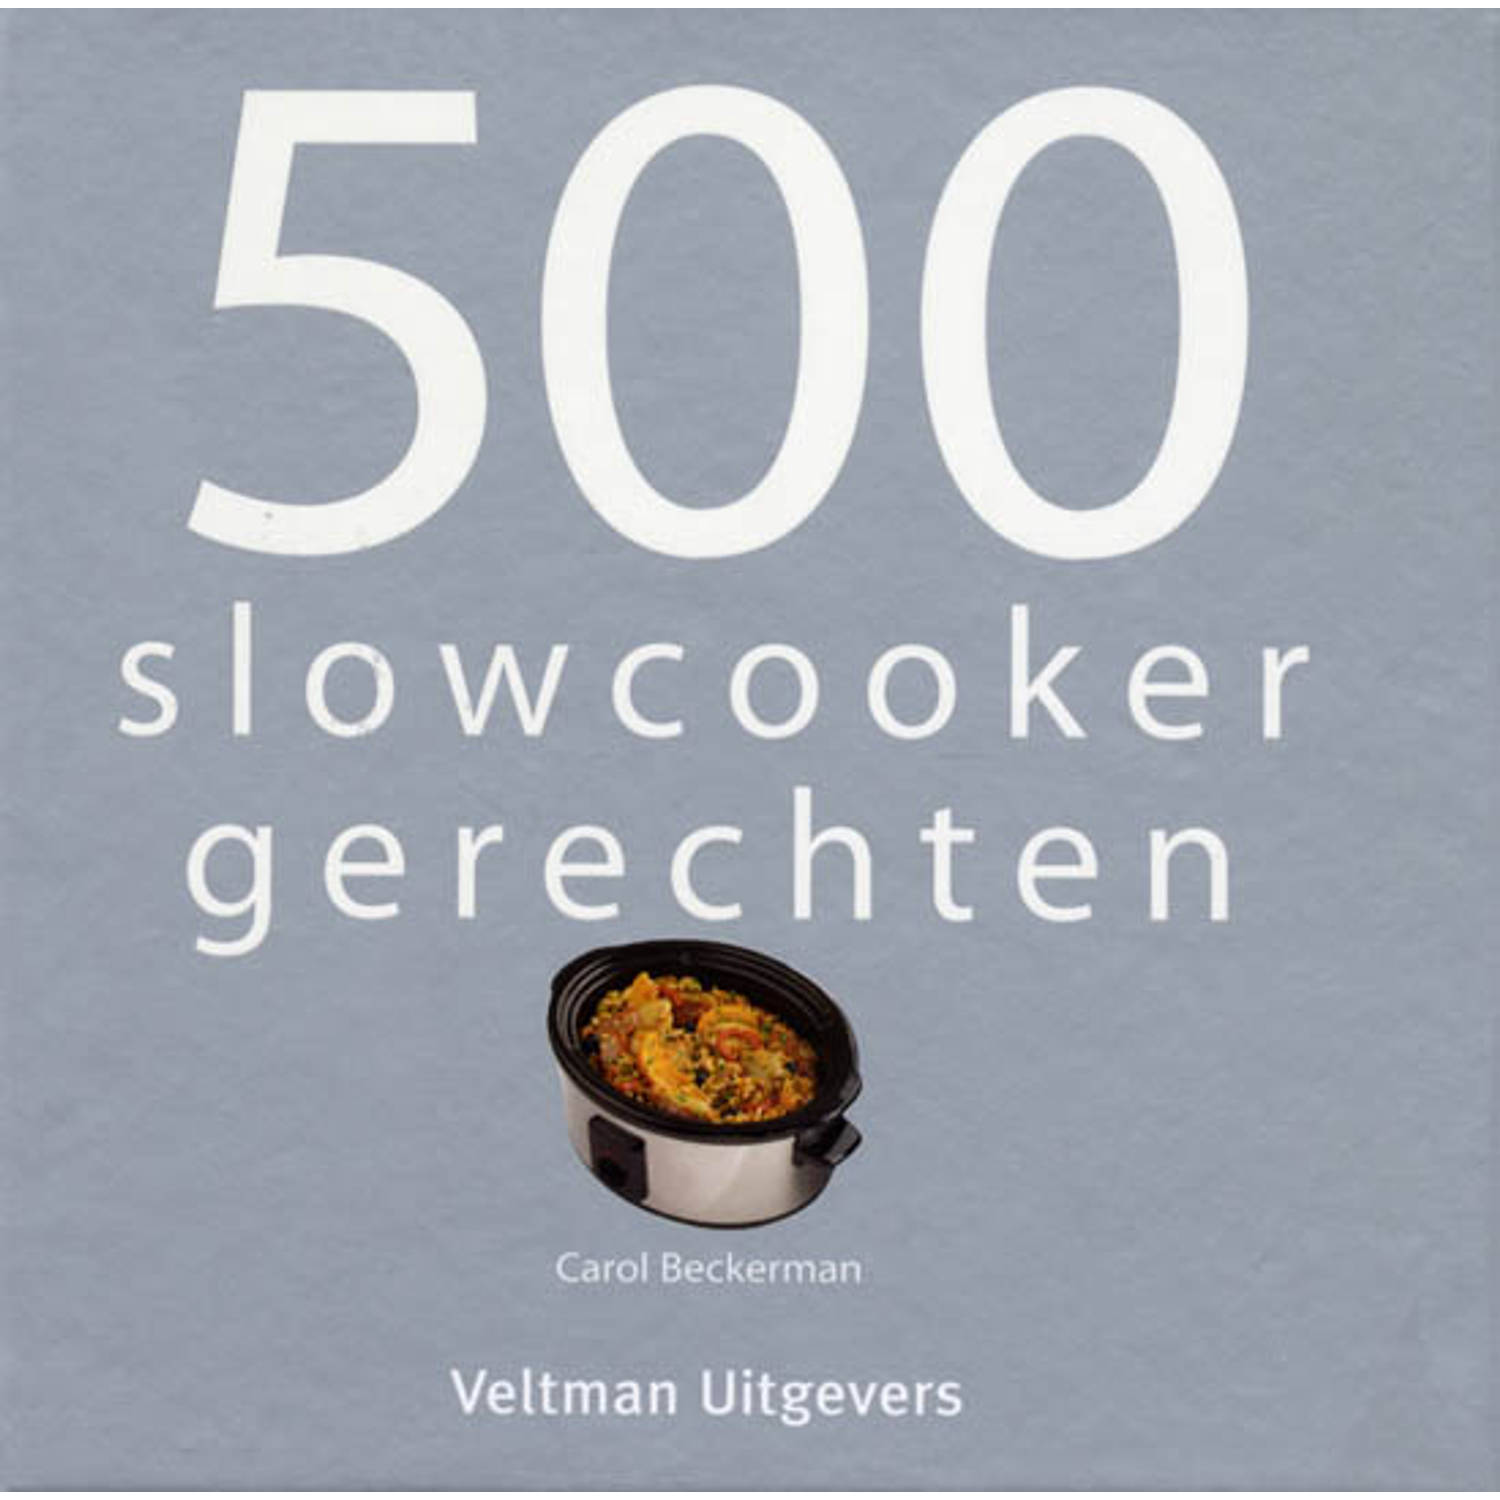 500 Slowcookergerechten